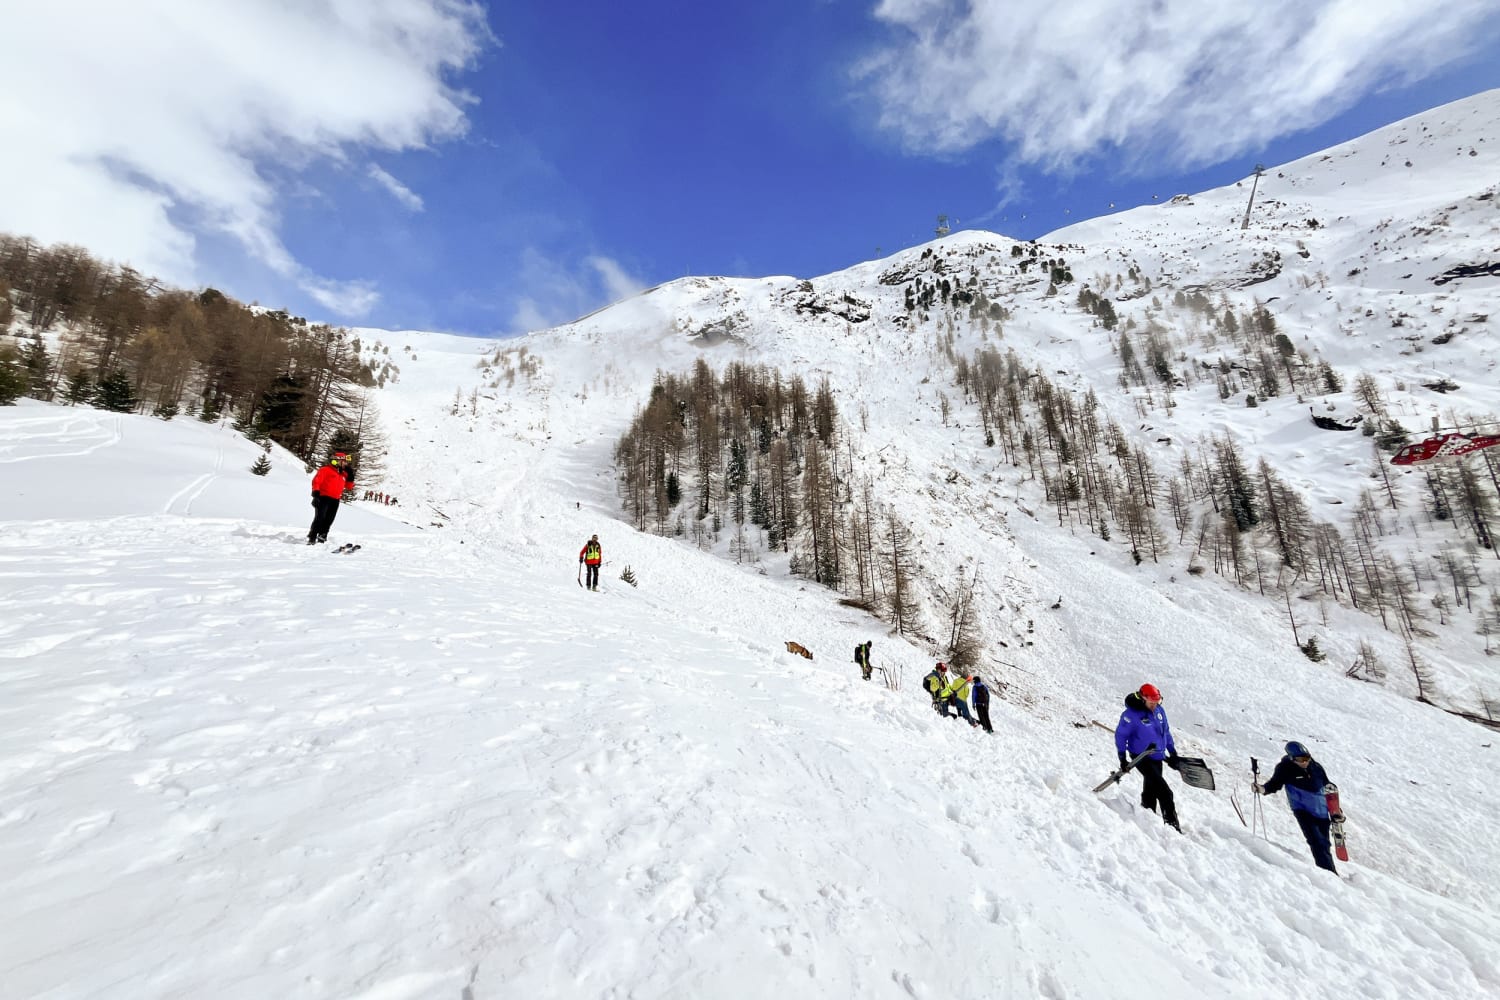 American teenager, 2 other people killed in avalanche near Swiss resort of Zermatt